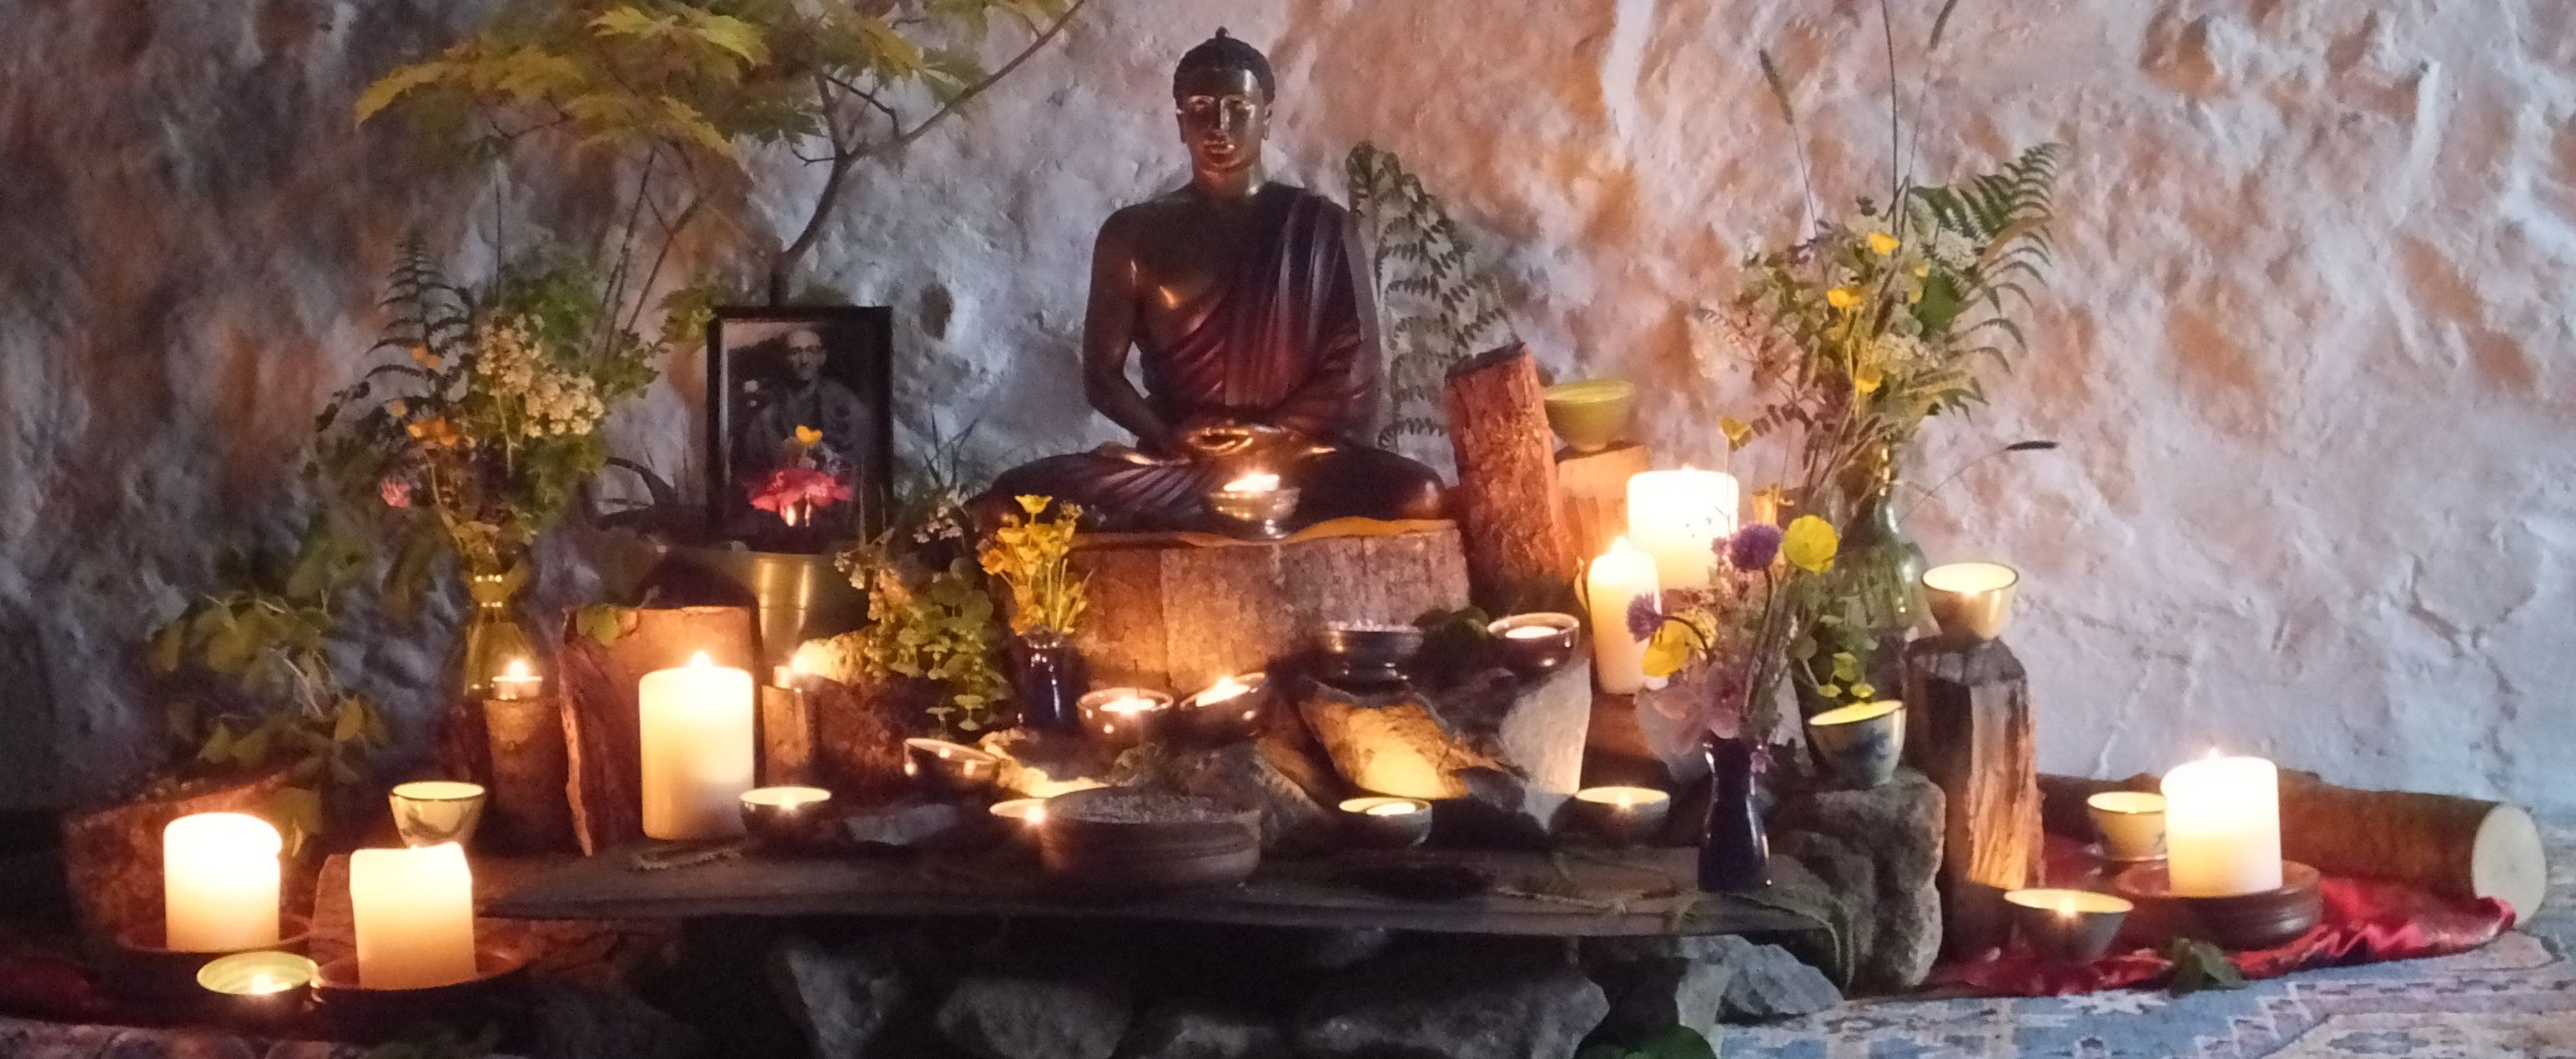 Buddhist Centre Dublin